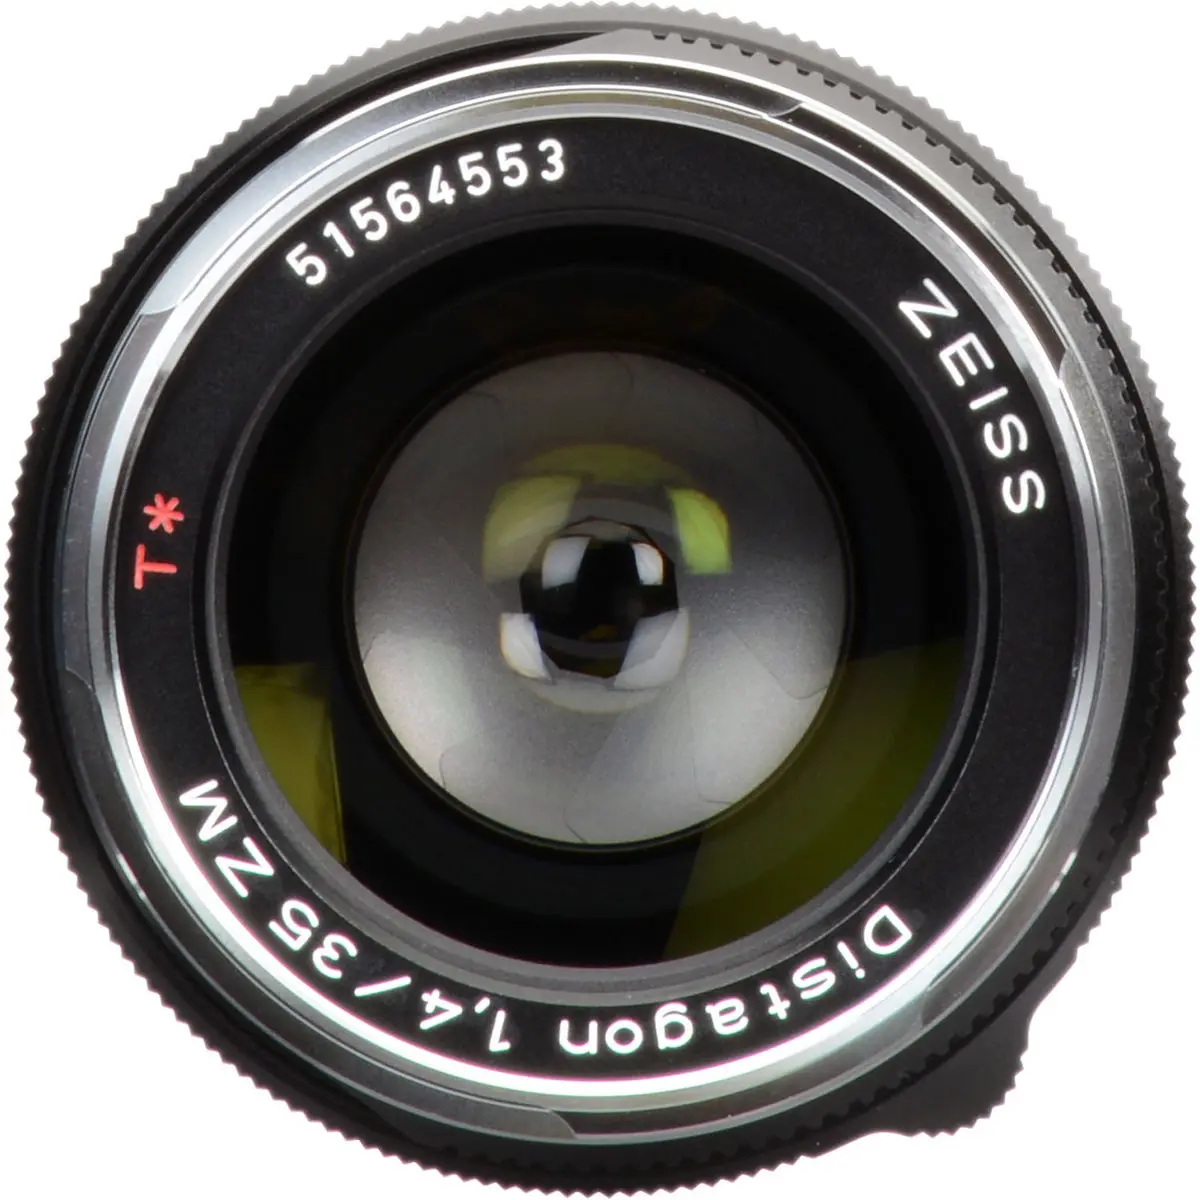 10. Carl Zeiss Distagon T* 35mm f/1.4 ZM Lens (Black) Lens